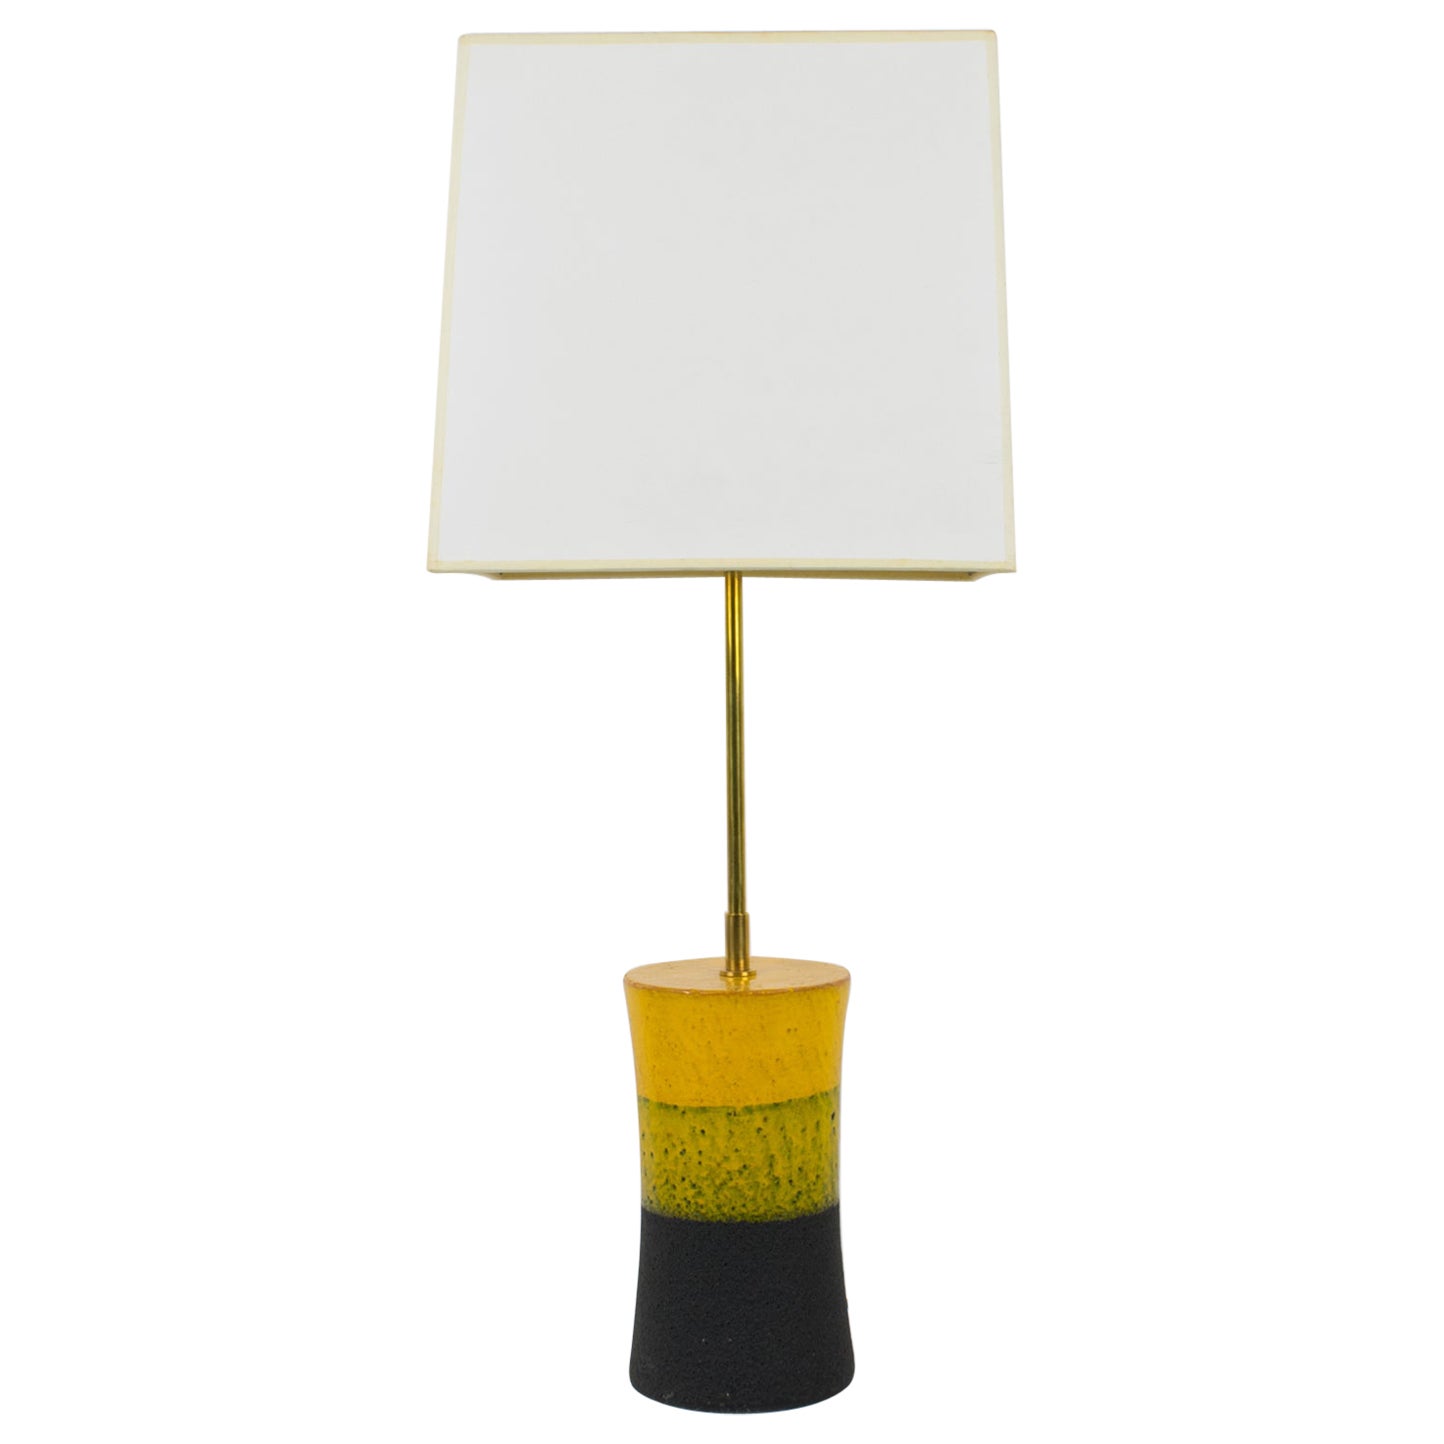 Aldo Londi for Bitossi Italy Mondrian Design Ceramic Table Lamp, 1960s